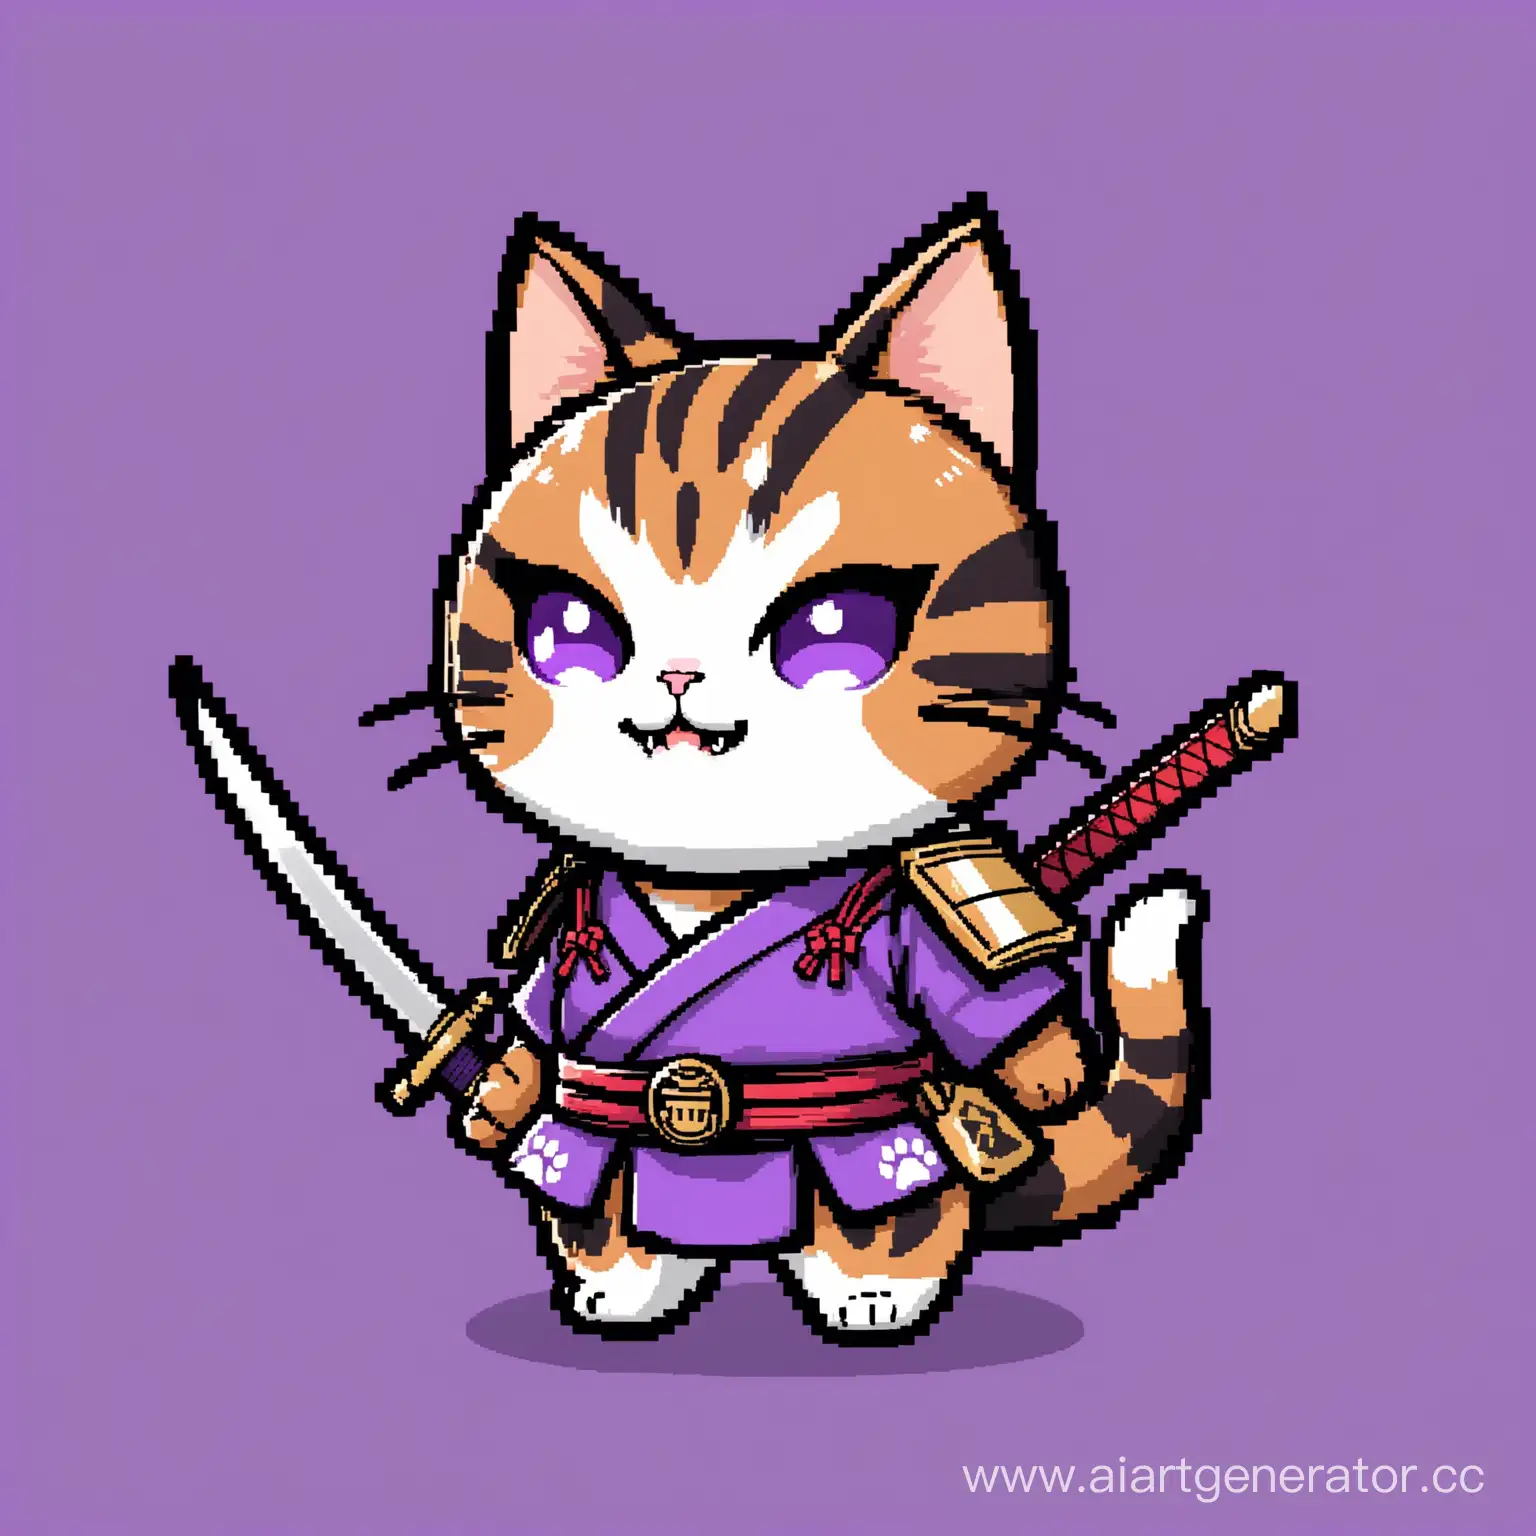 Samurai-Cat-with-Twitch-Emblem-Feline-Warrior-Bearing-the-Icon-of-Streaming-Platform